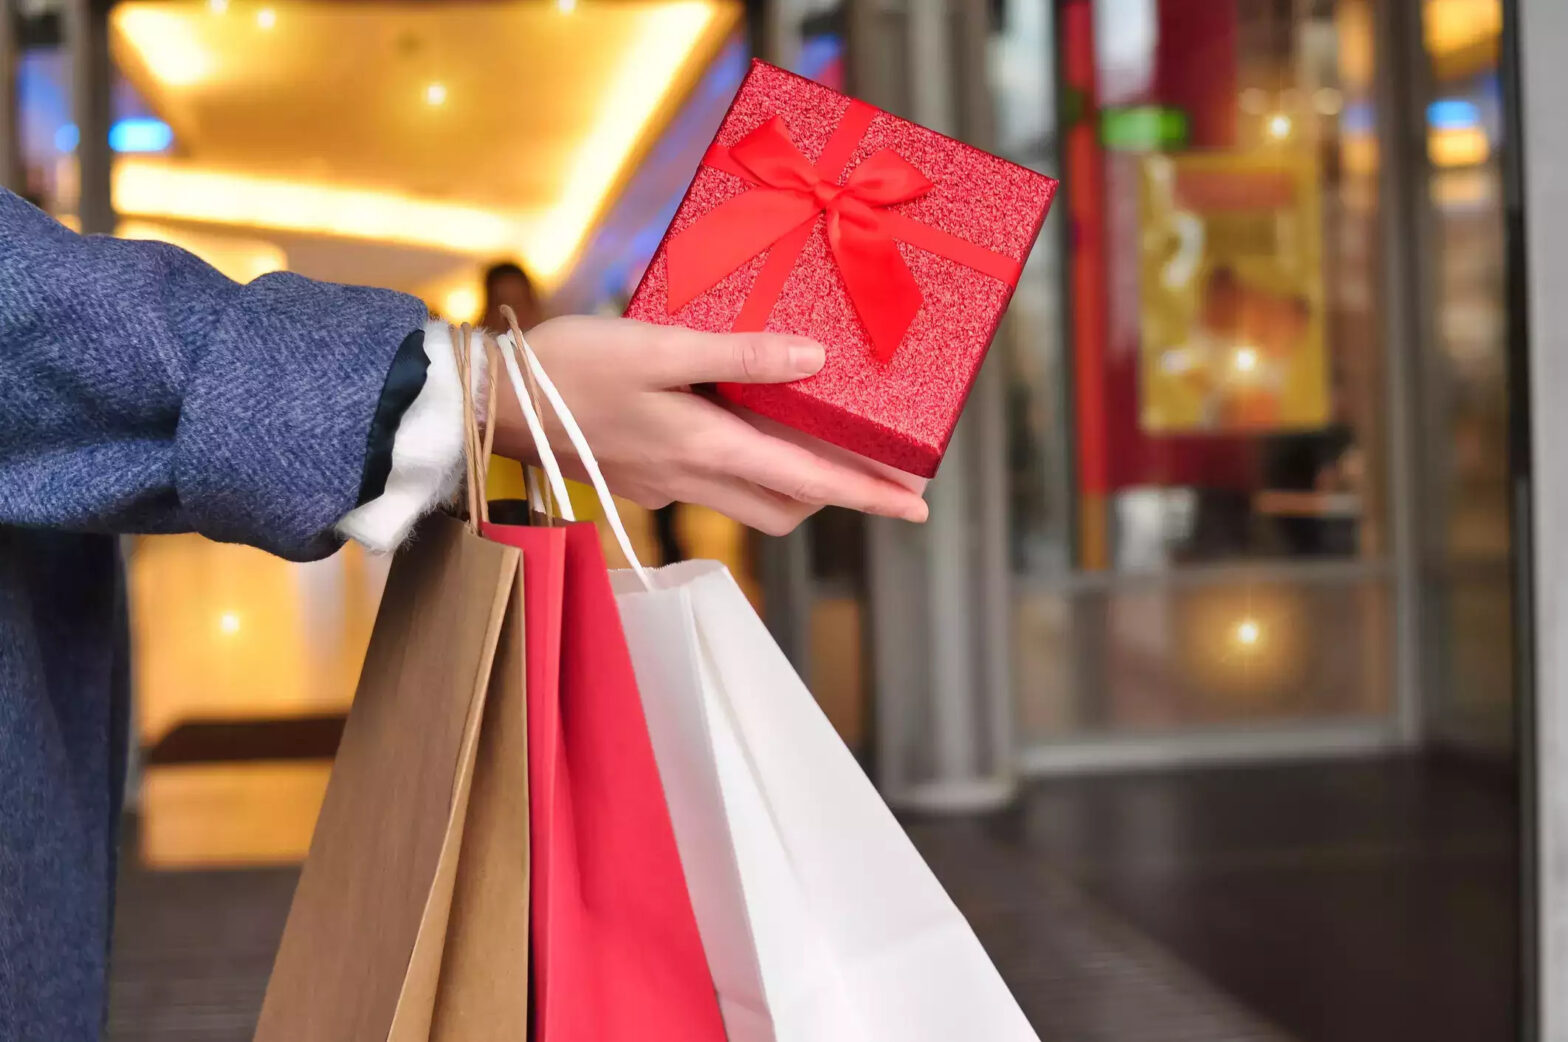 Retailers evaluating consumer spending during holiday hiring season